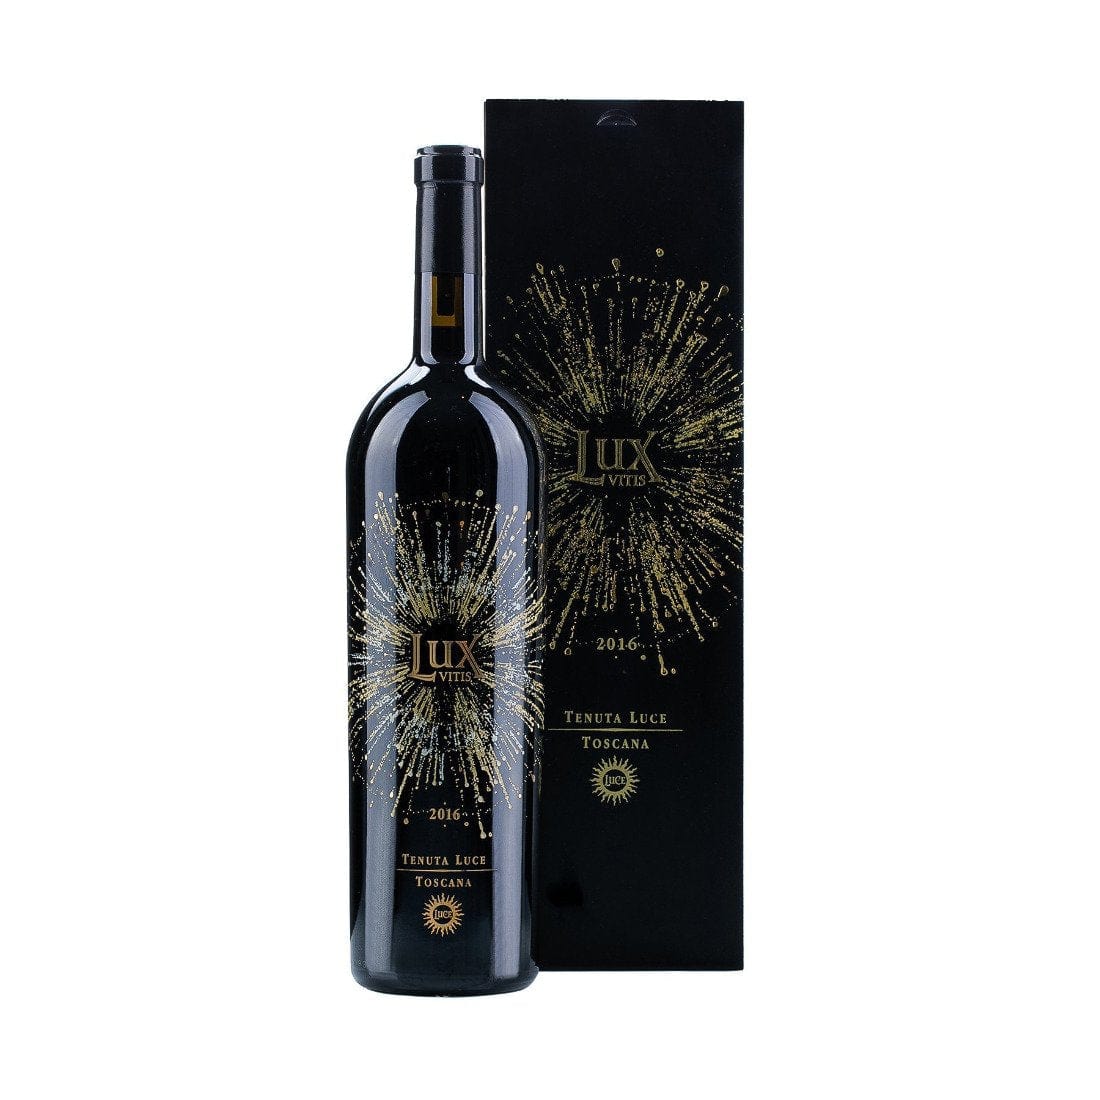 Lux Vitis 2019 Igt Toscana Magnum - Frescobaldi-Vinolog24.com